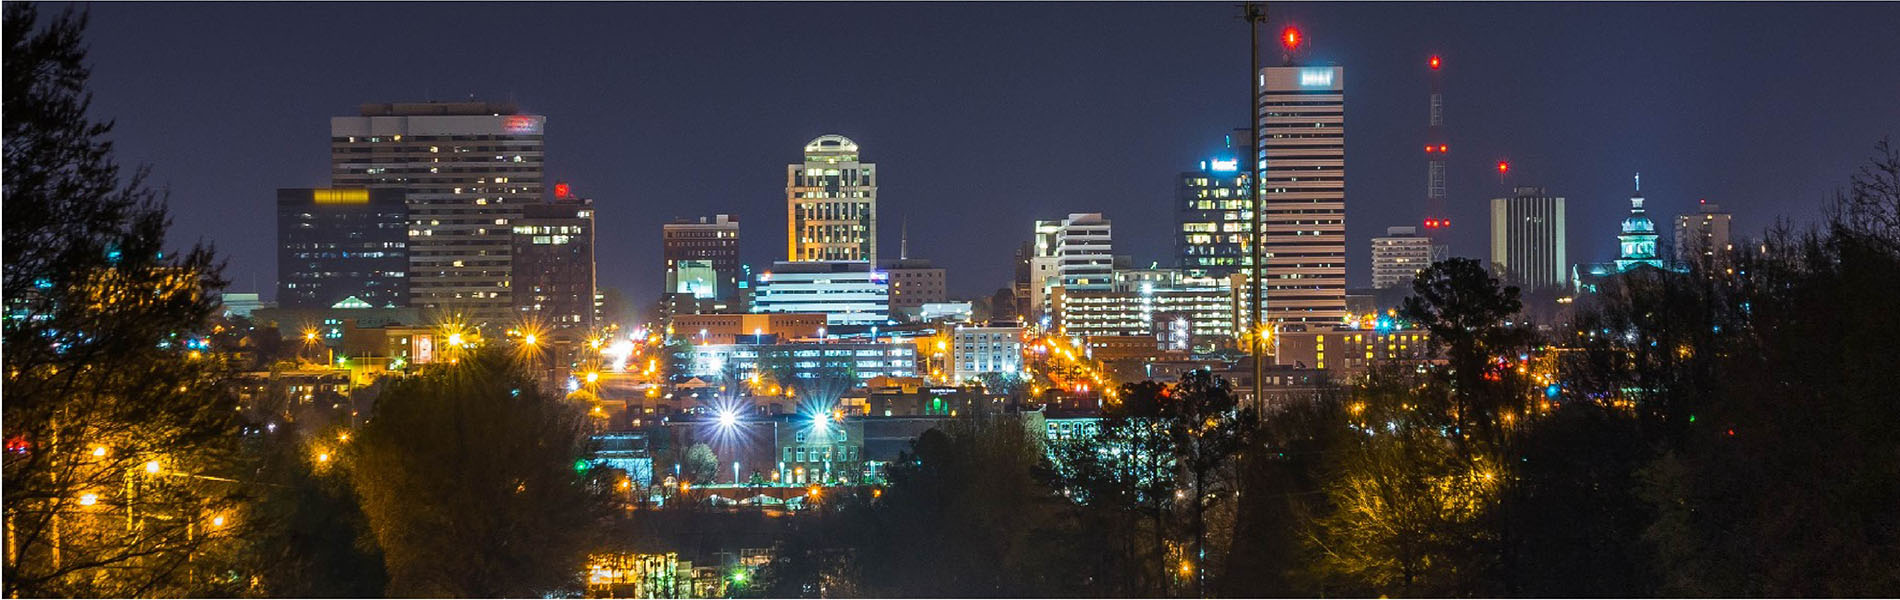 Nighttime City of Columbia skyline